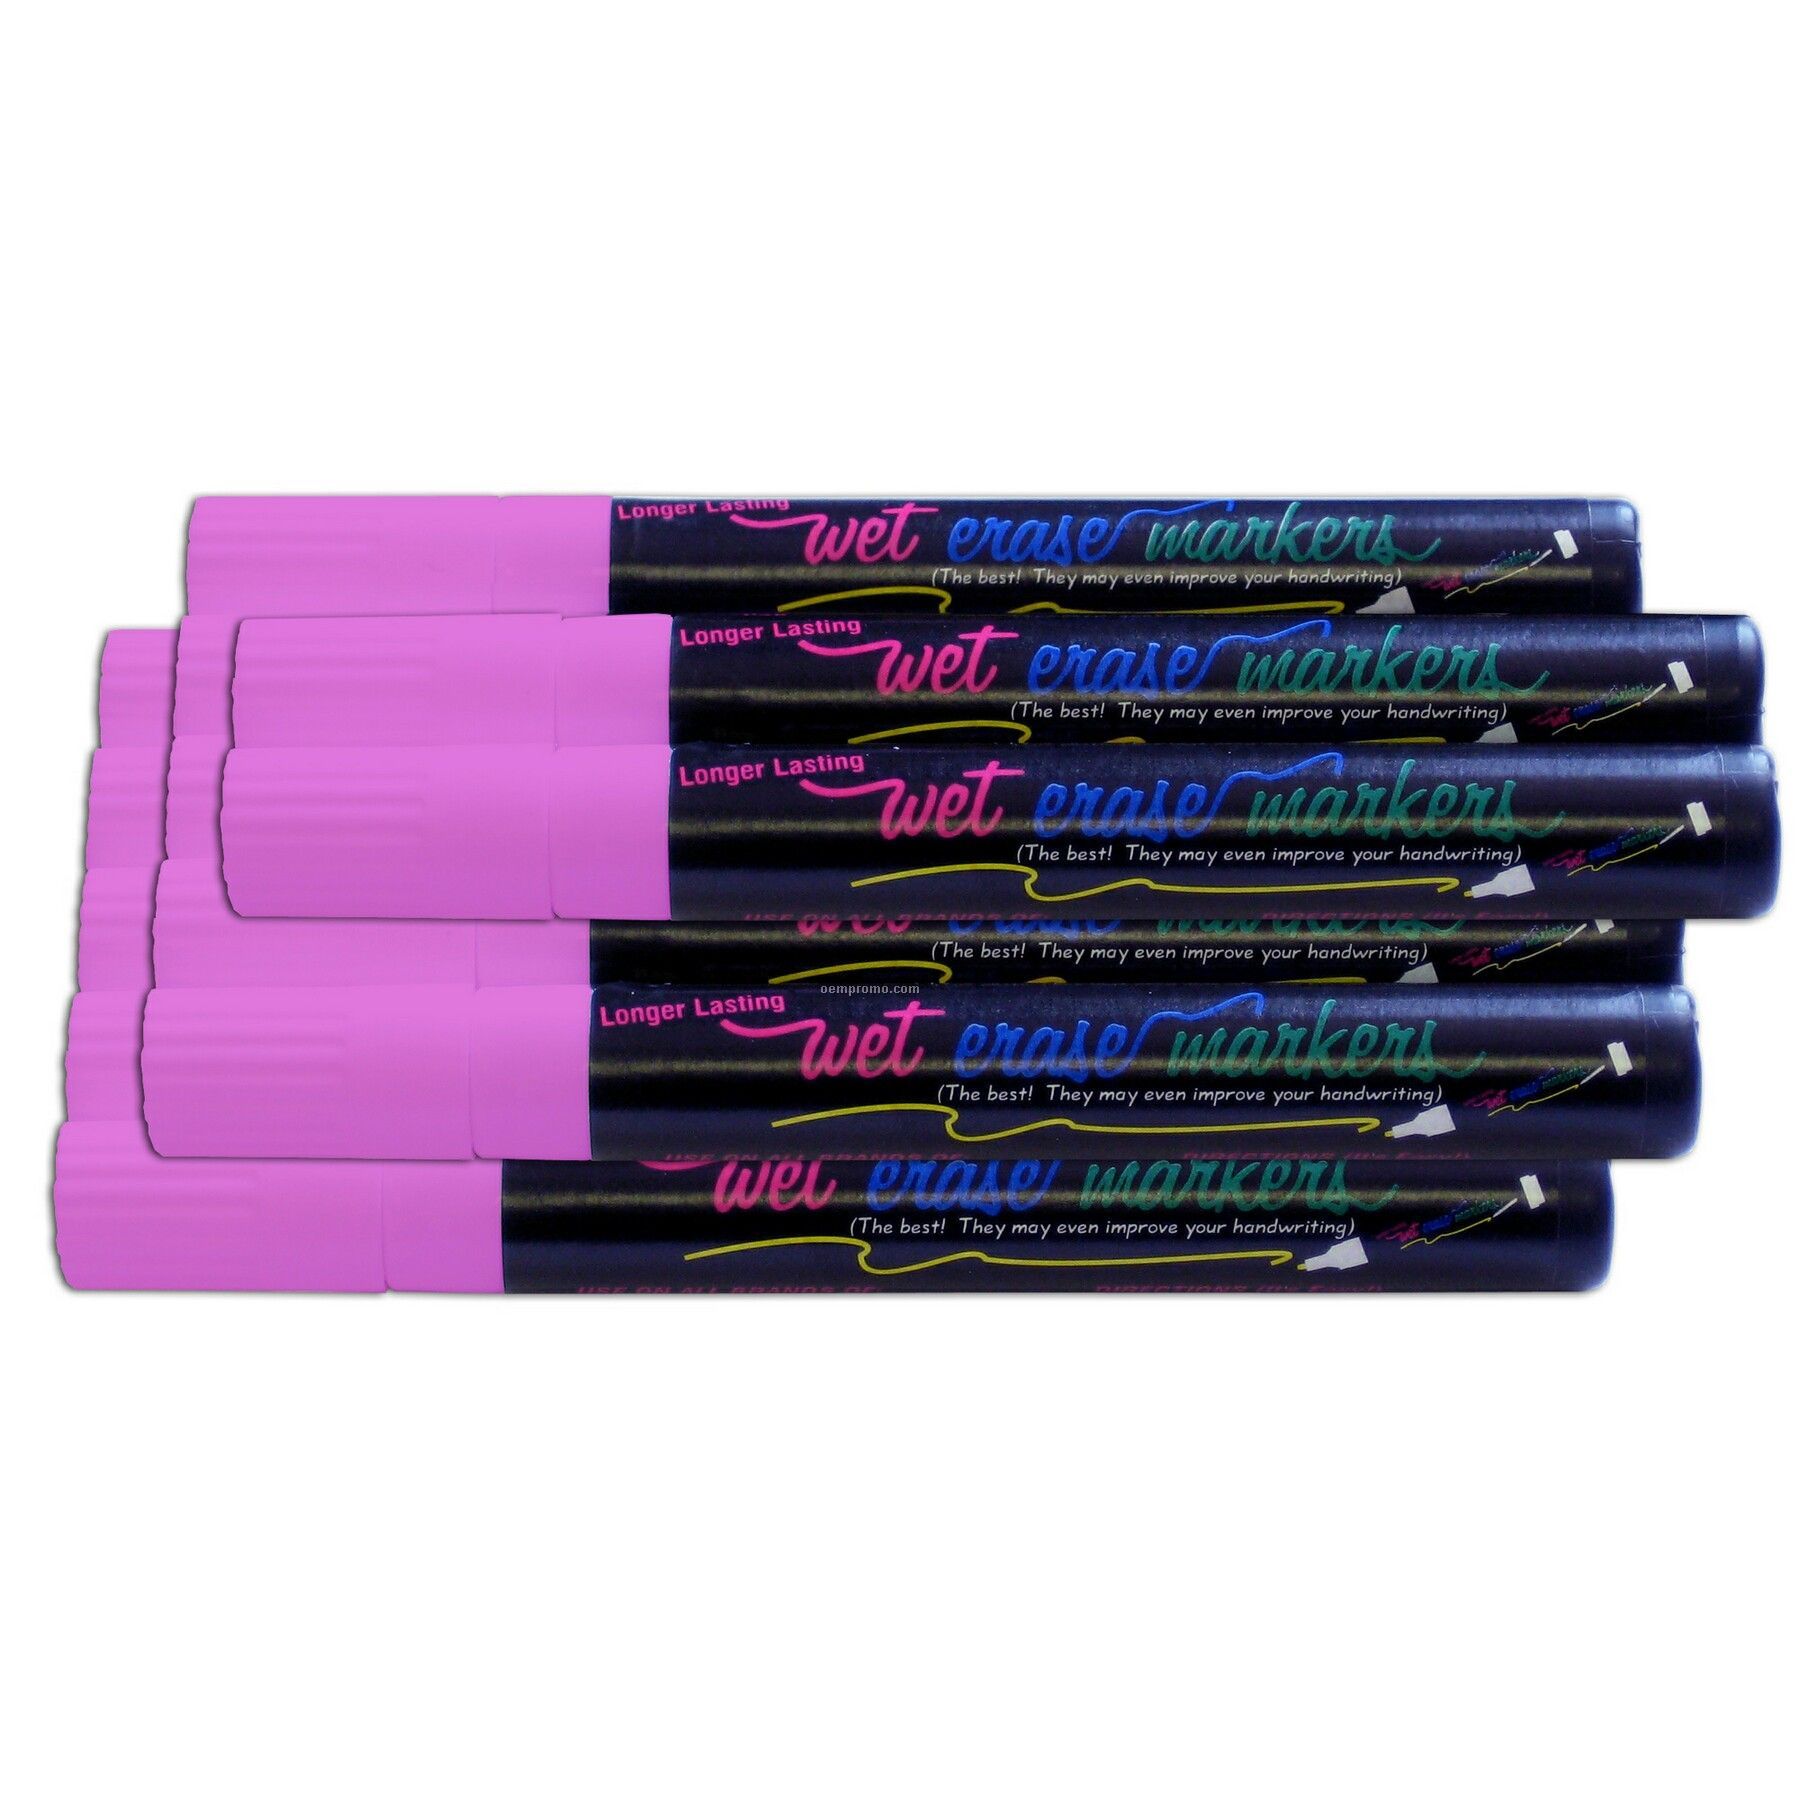 Wet Erase Marker Set - Purple (12 Pack)